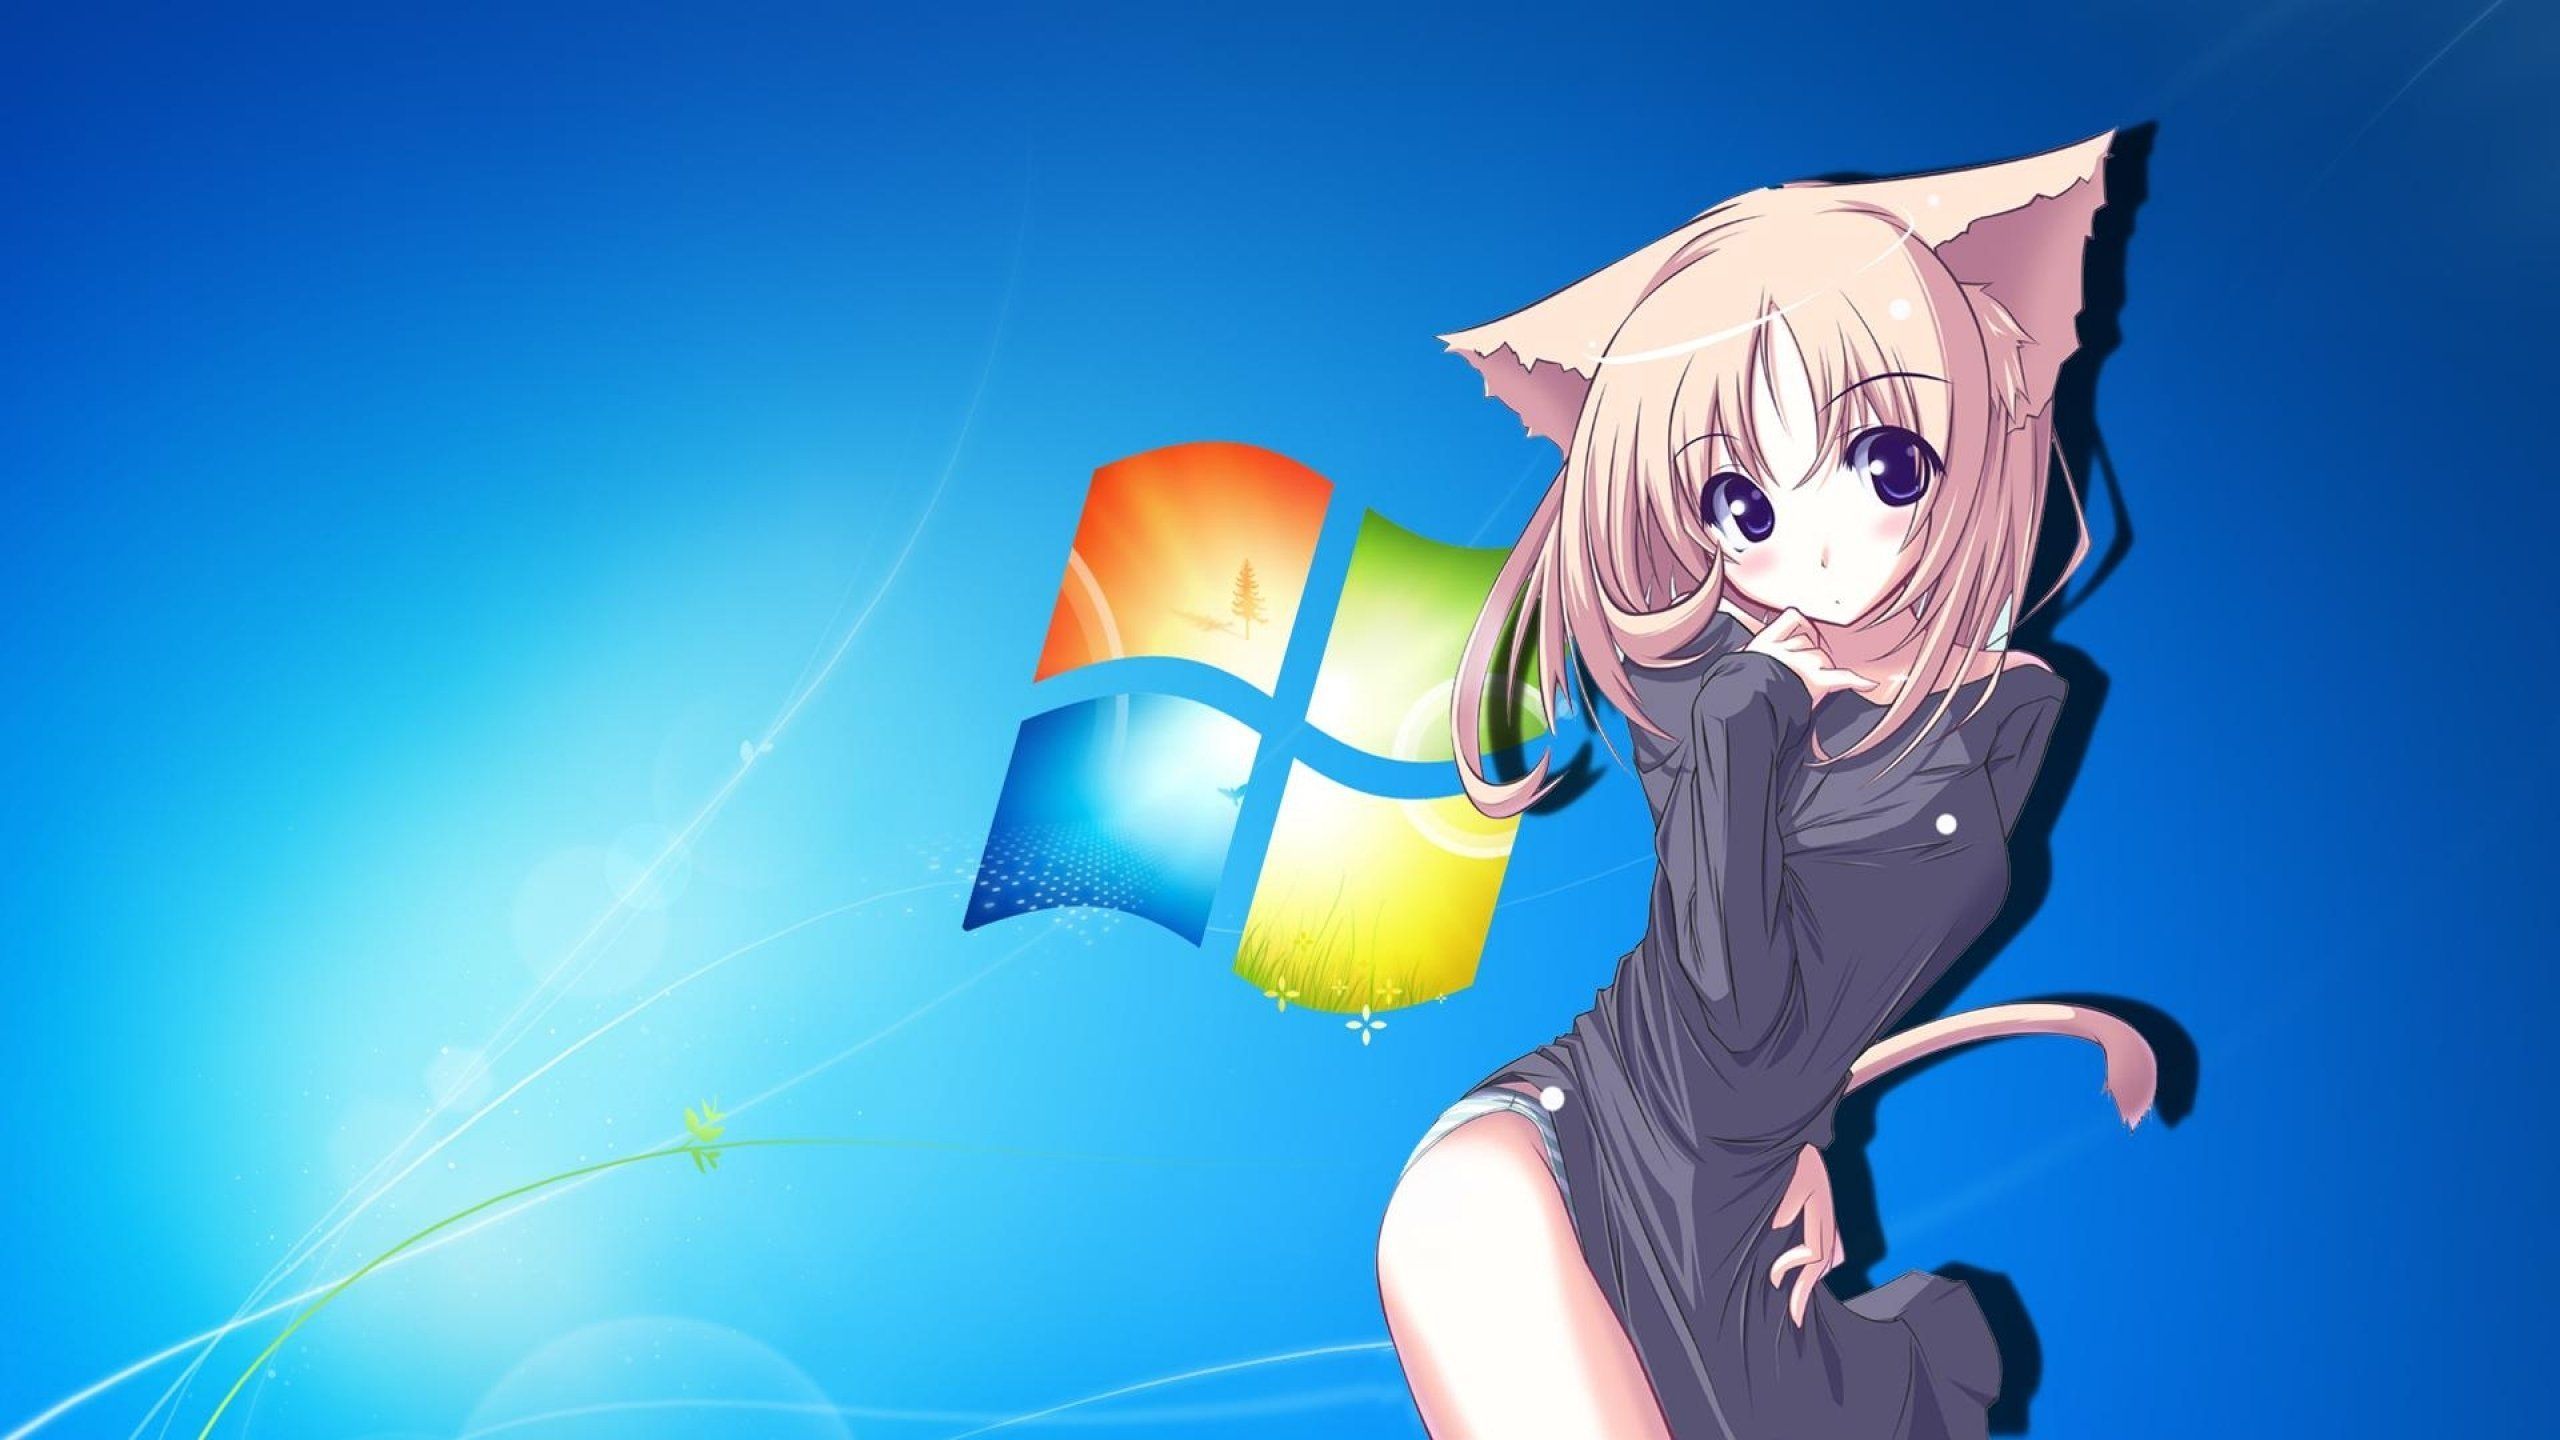 Anime cat background